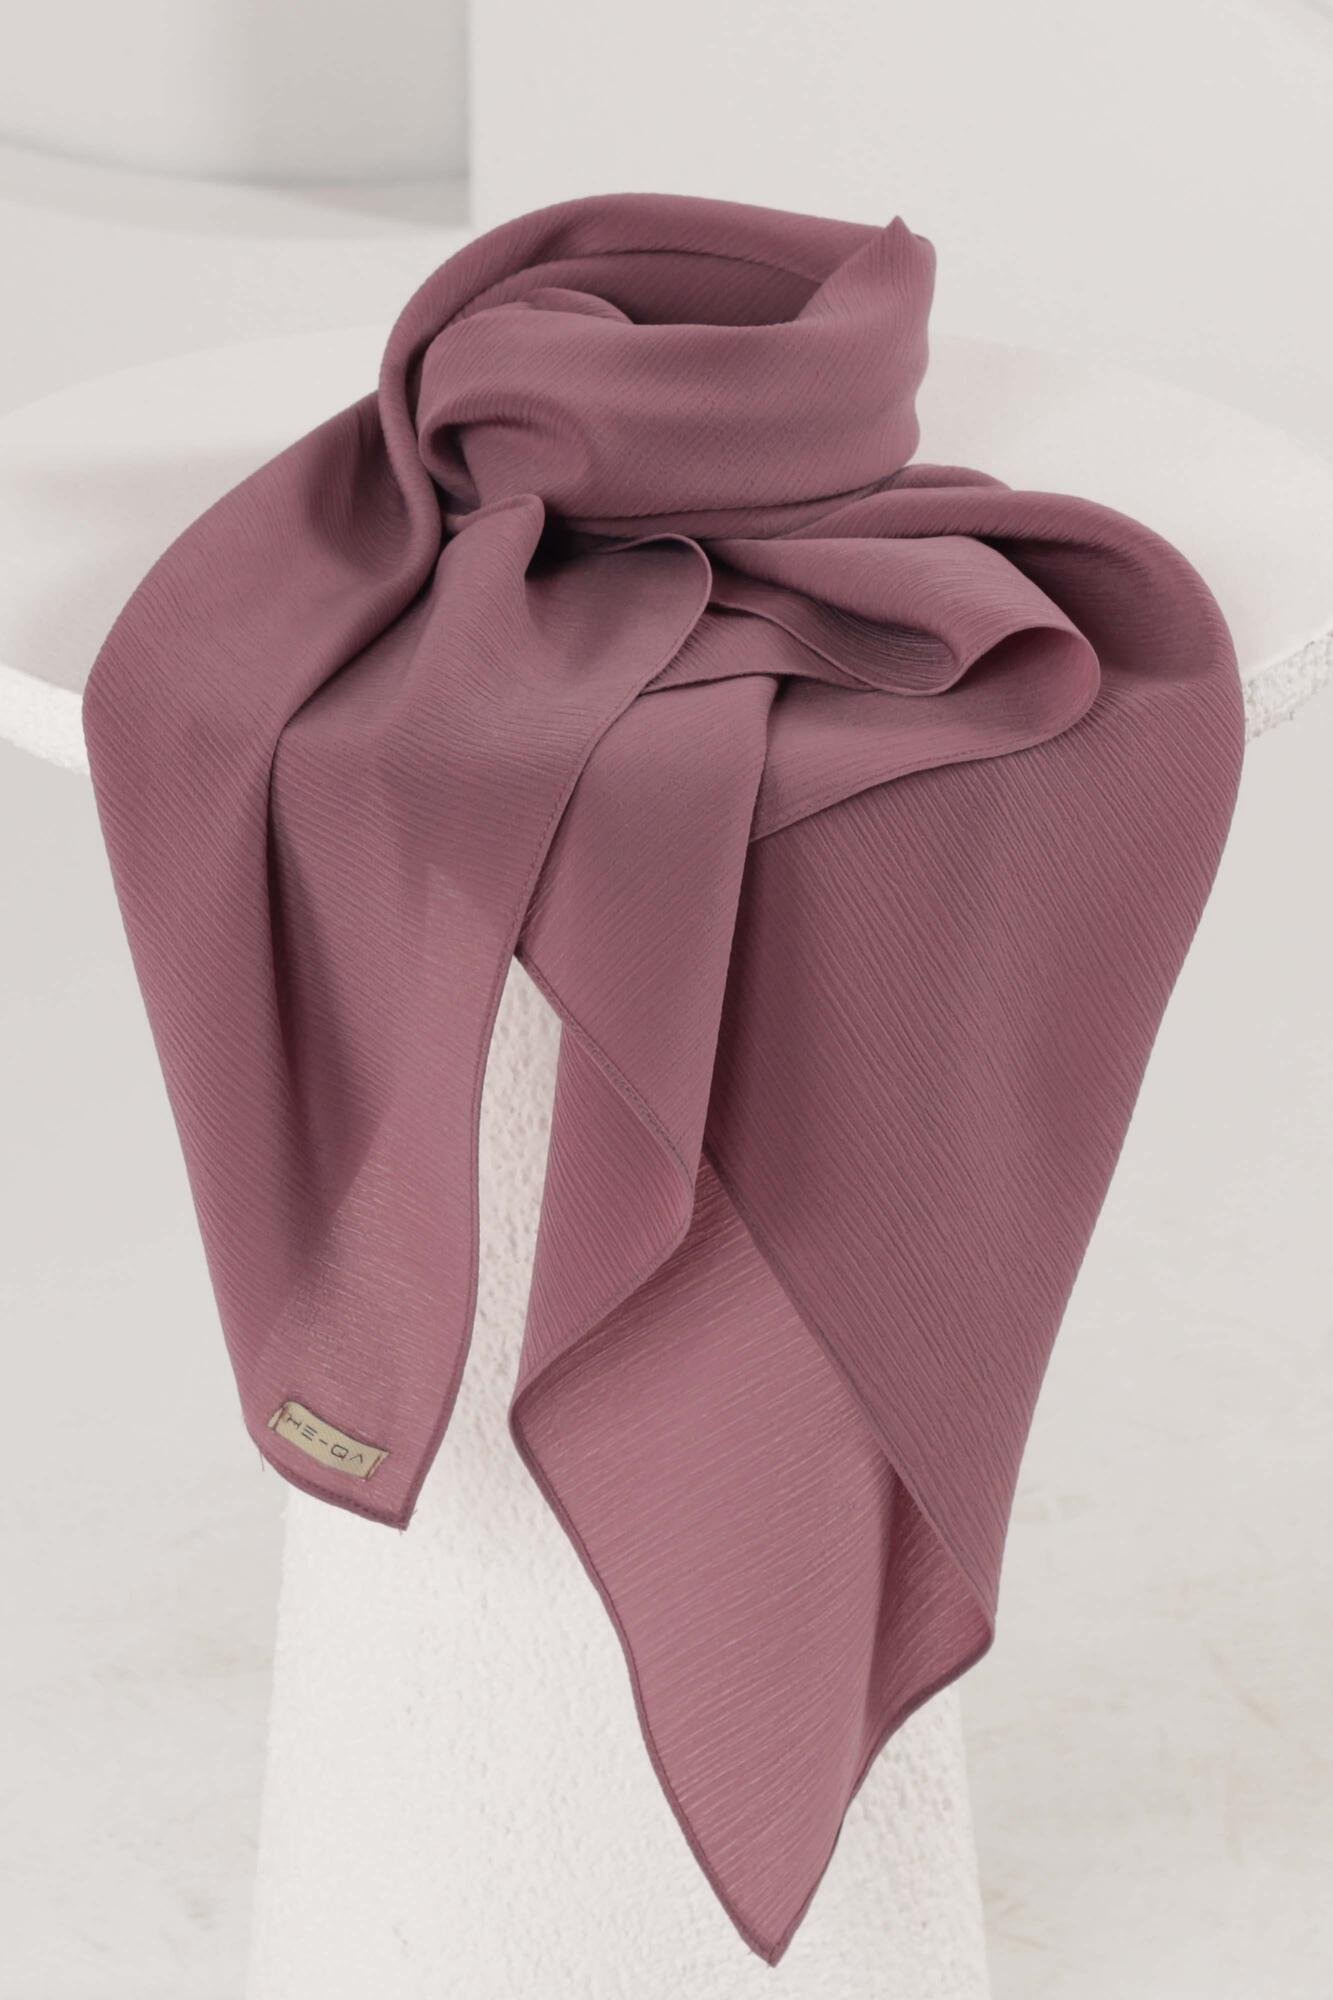 Yoryo rose scarf-new